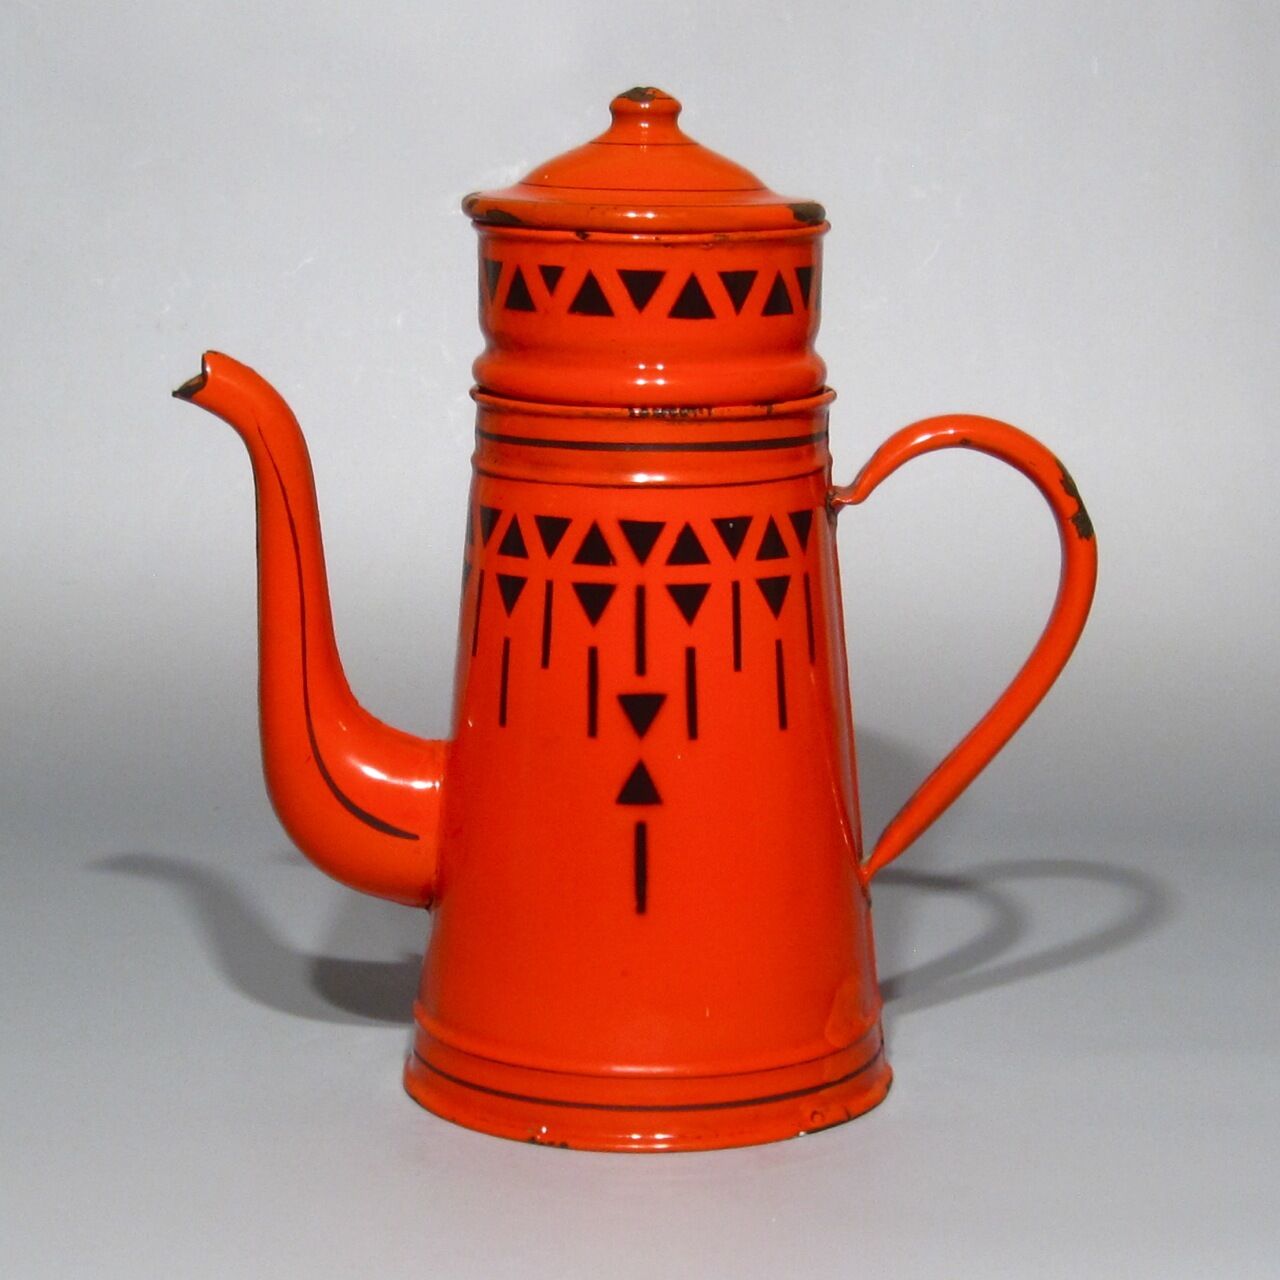 Vintage French Art Deco Enamelware Red Enamel Coffee Pot 